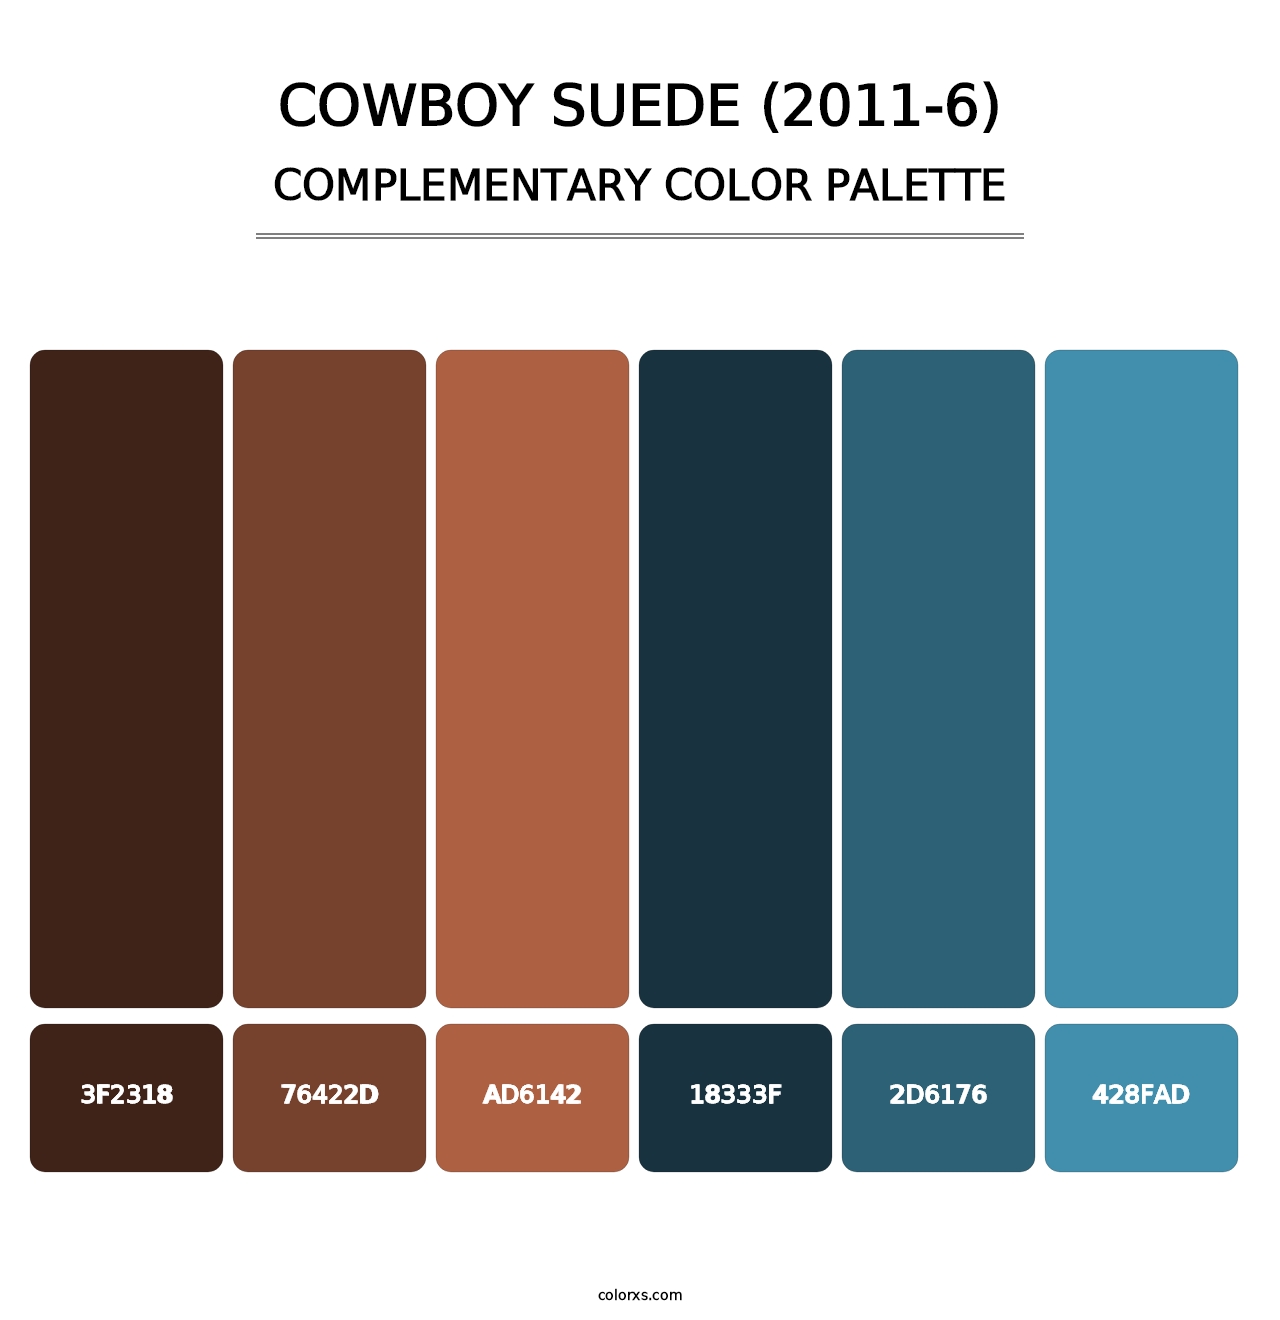 Cowboy Suede (2011-6) - Complementary Color Palette